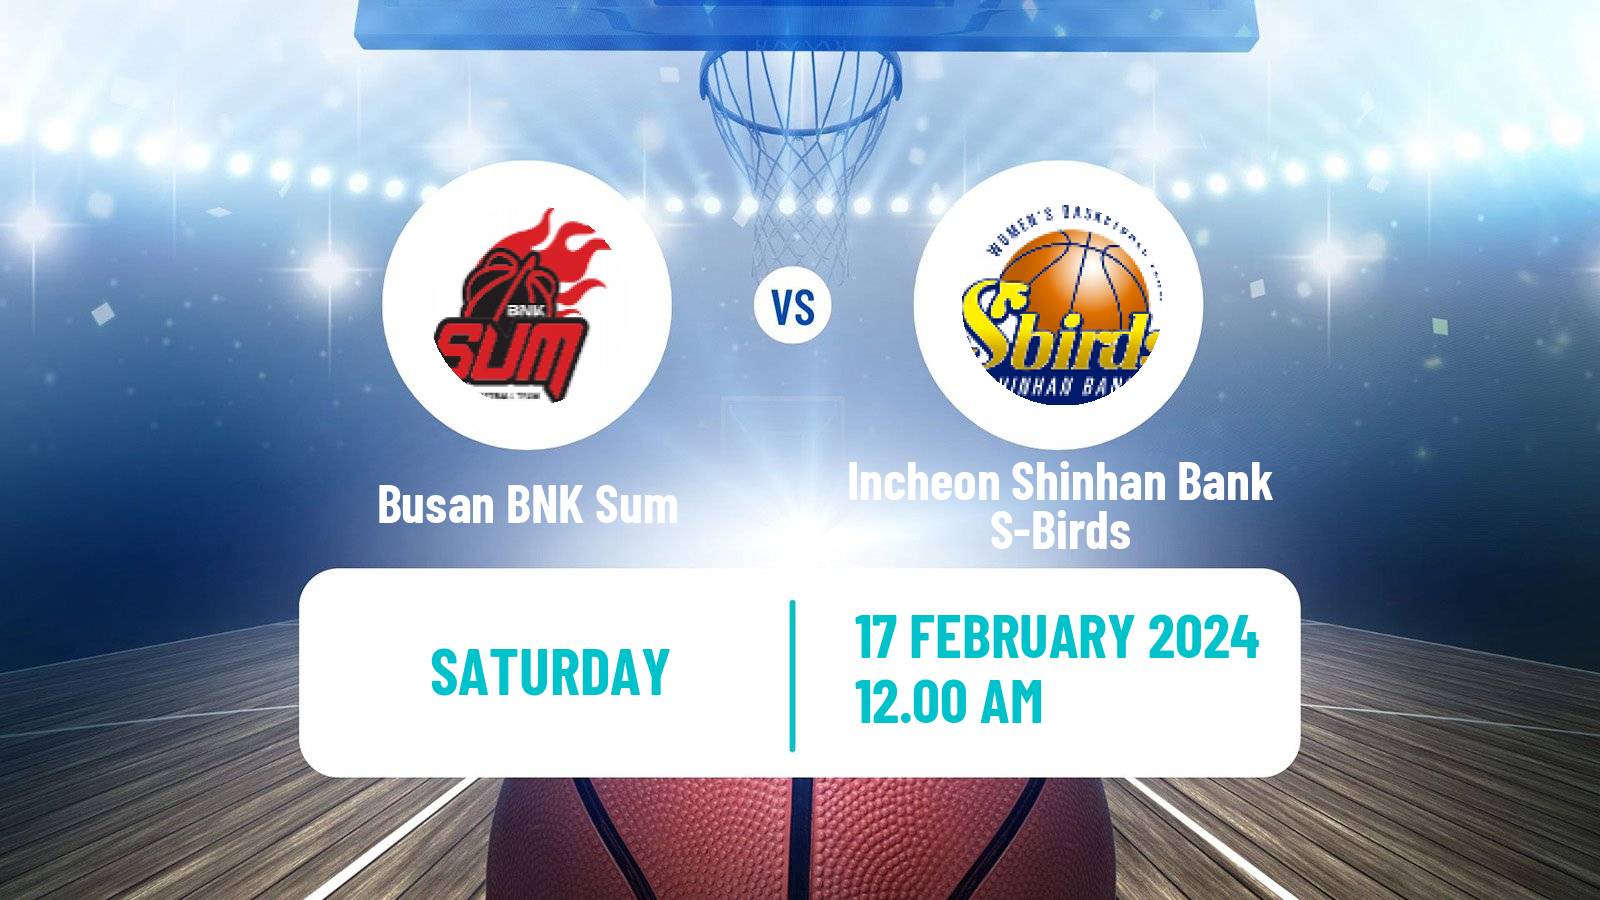 Basketball WKBL Busan BNK Sum - Incheon Shinhan Bank S-Birds